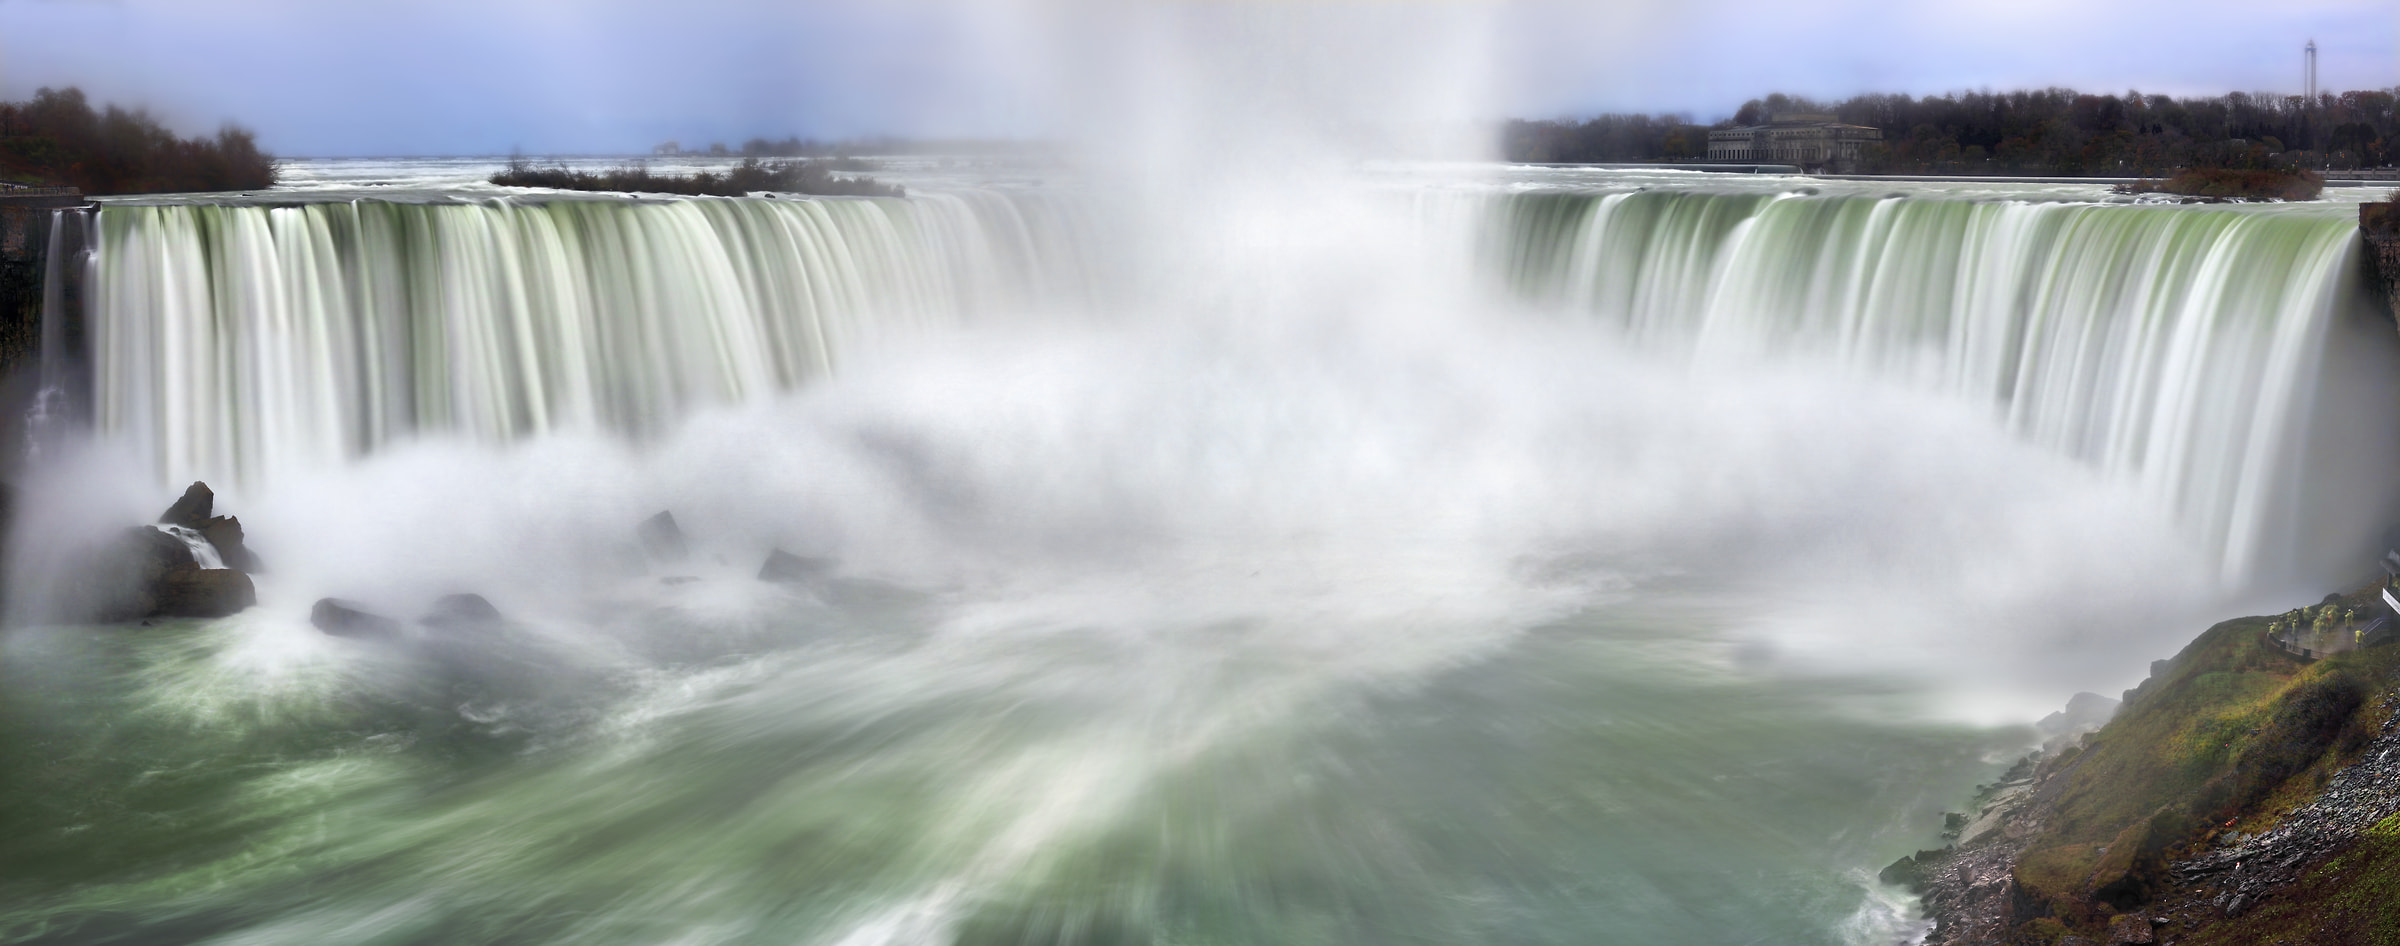 345 megapixels! A very high resolution, large-format VAST photo print of Niagara Falls; photograph created by Phil Crawshay in Niagara Falls, Ontario, Canada